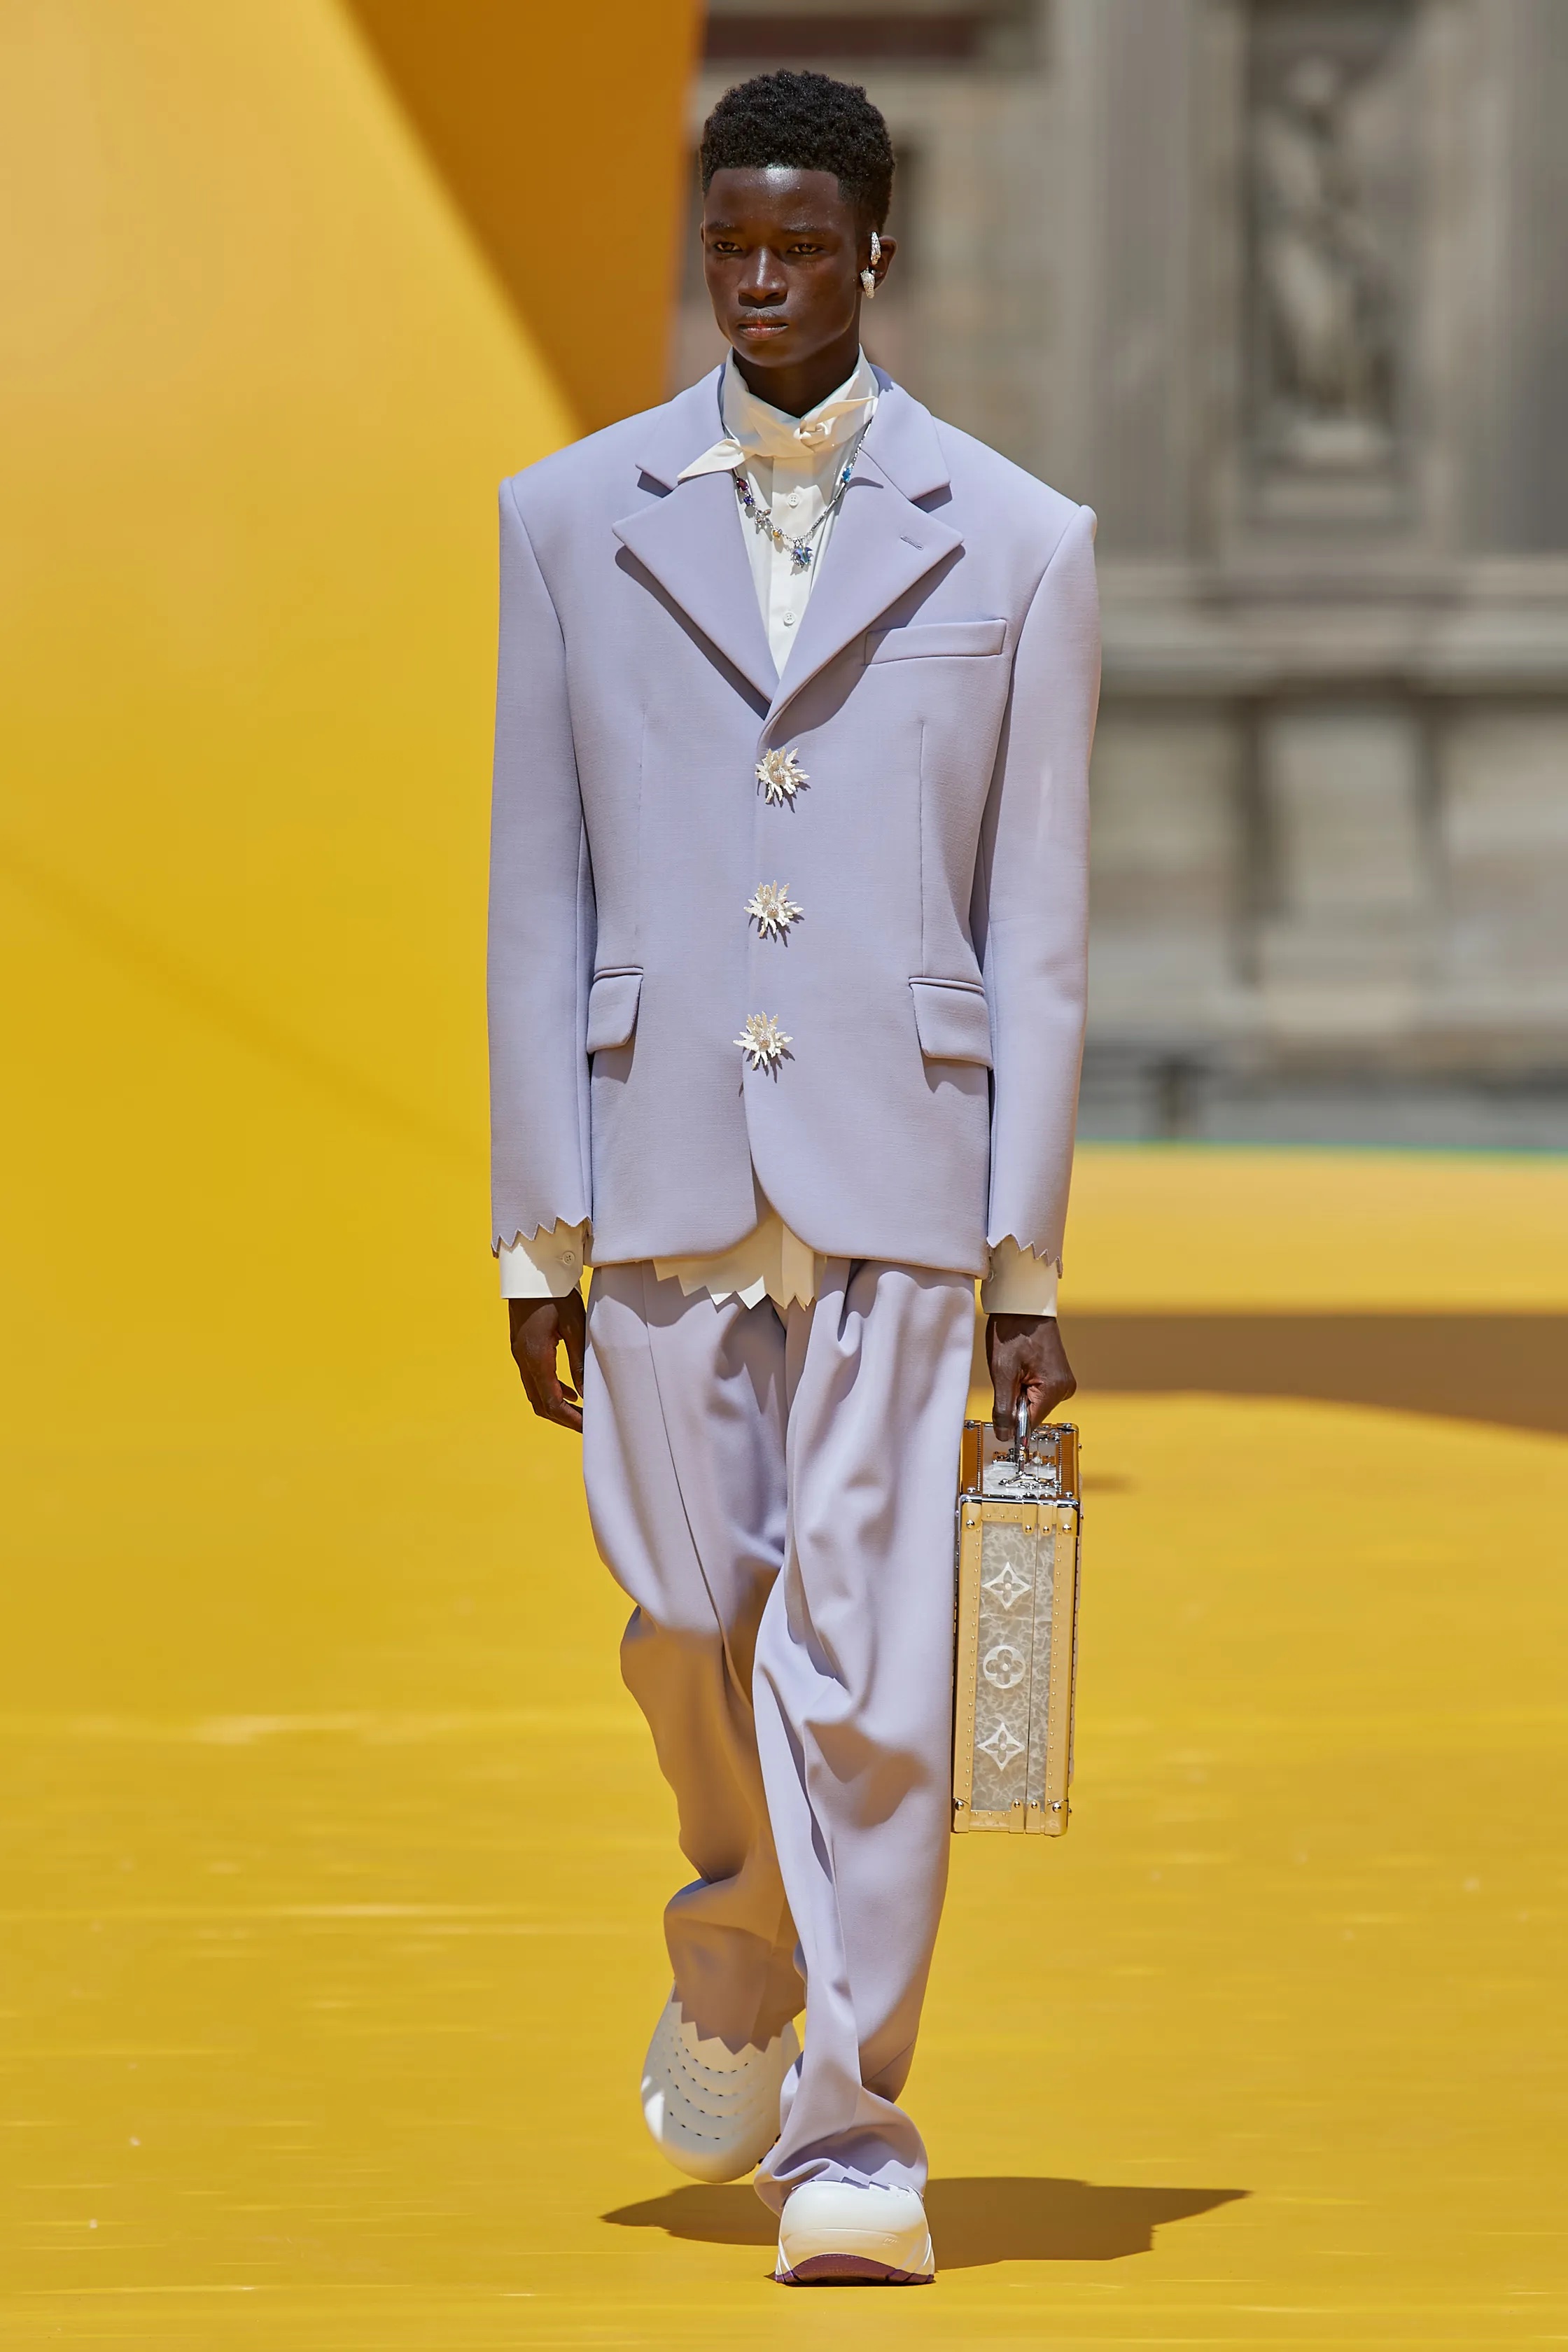 Louis Vuitton Menswear Spring '19 at Paris Fashion Week [PHOTOS